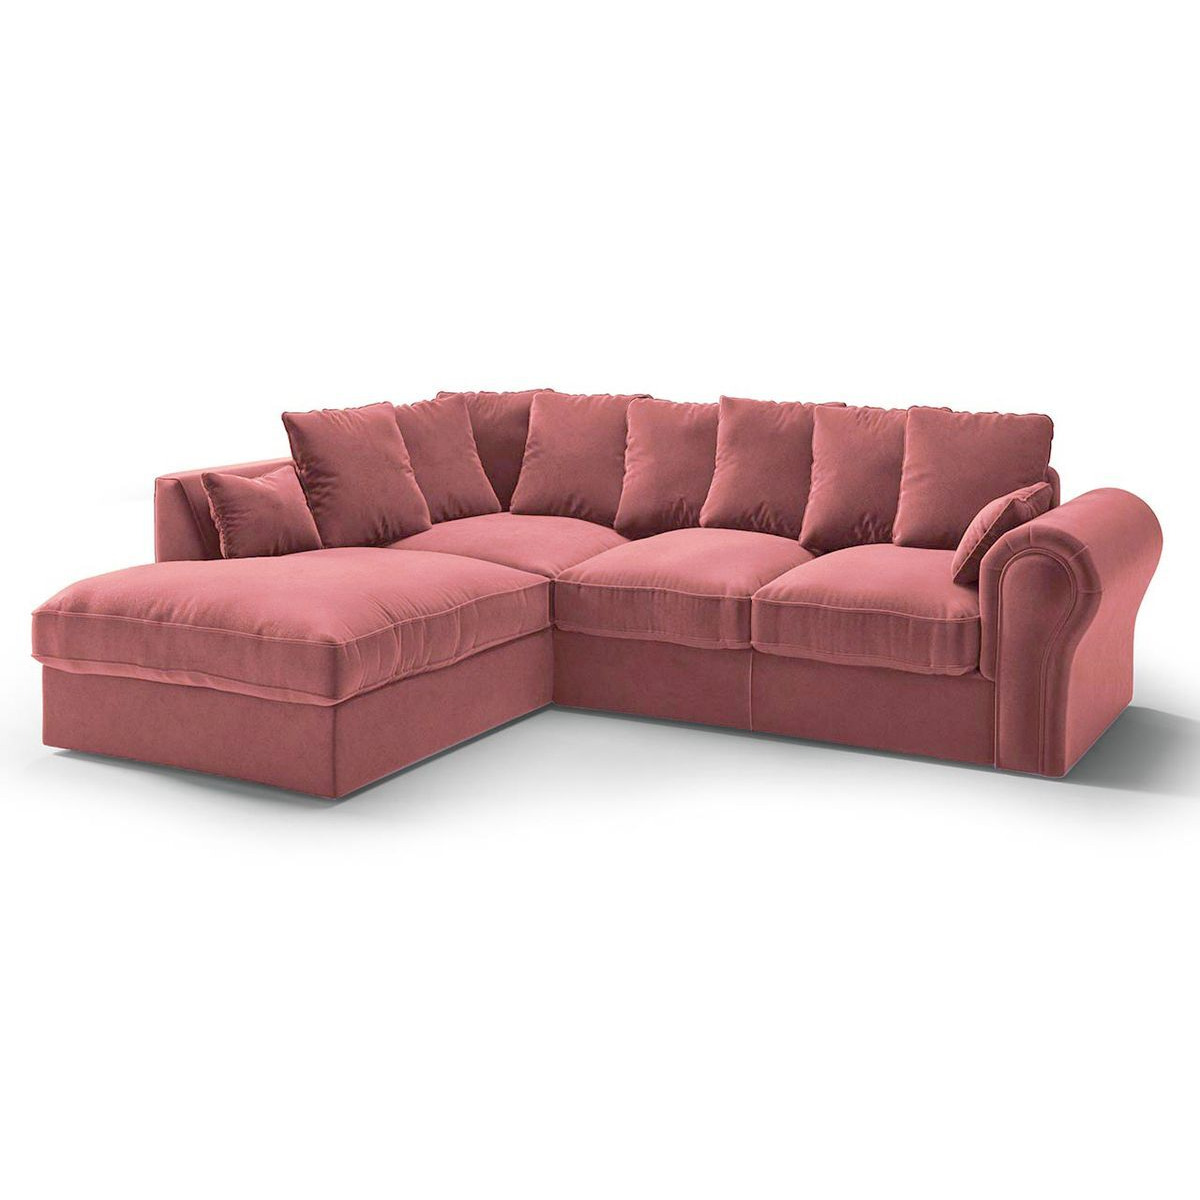 Baron Left Hand Corner Sofa, dirty pink - image 1